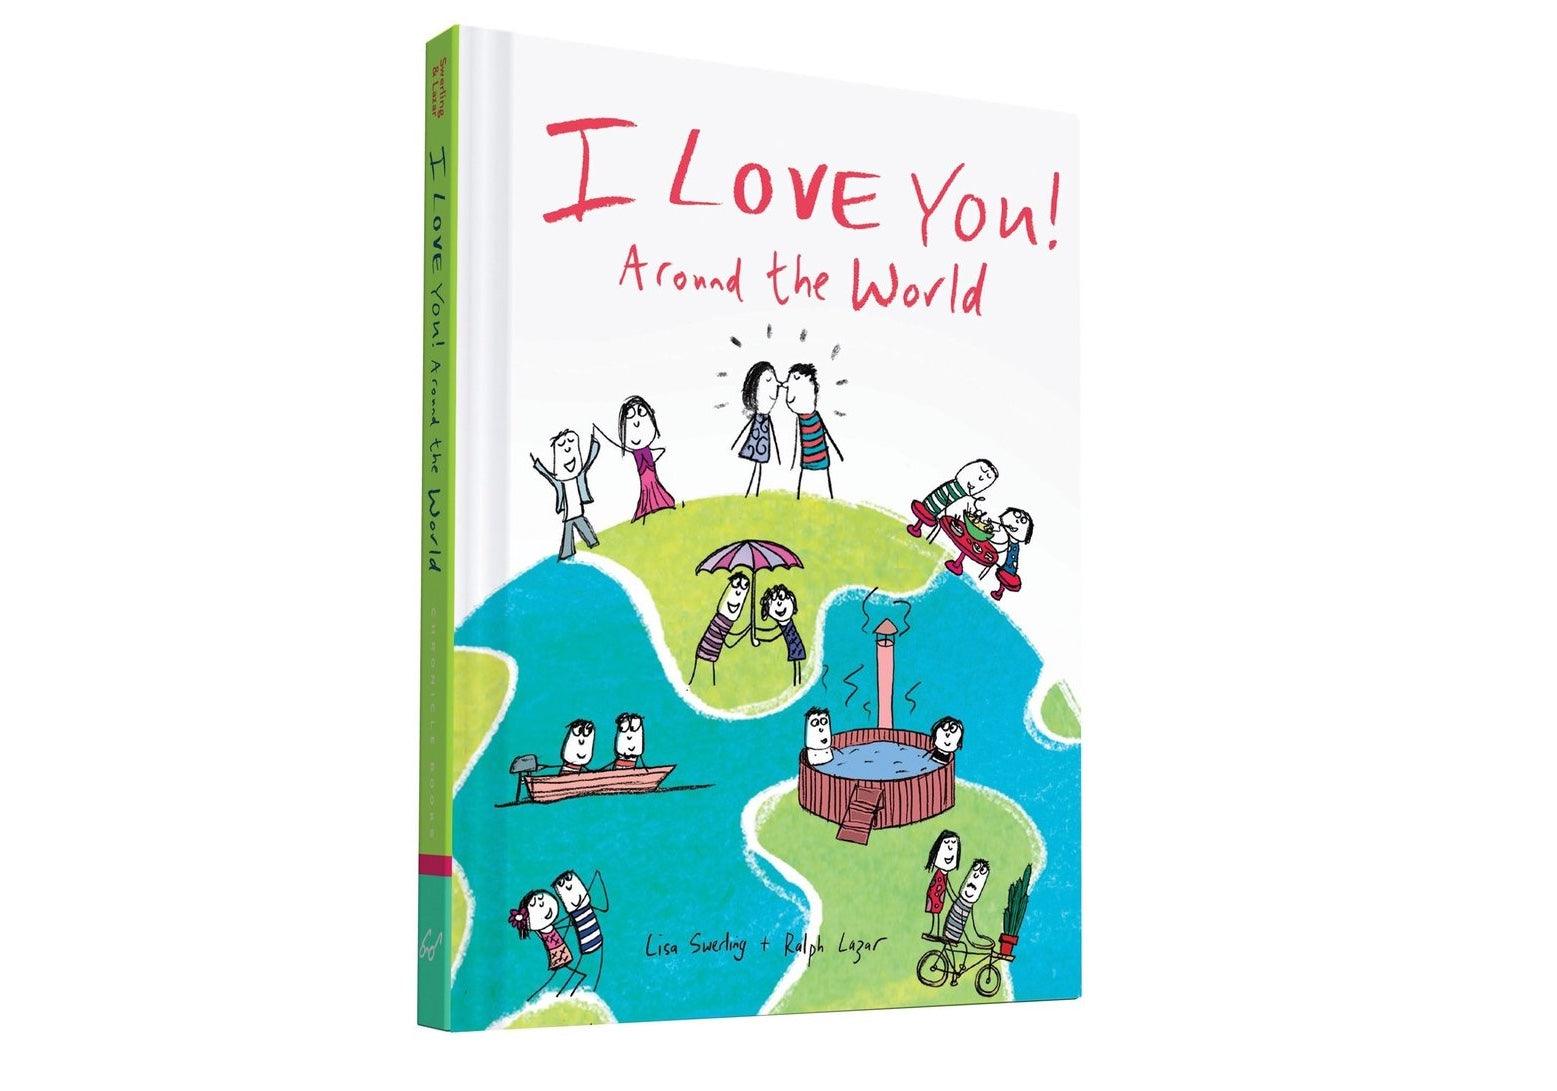 "I Love You Around the World" children's book cover